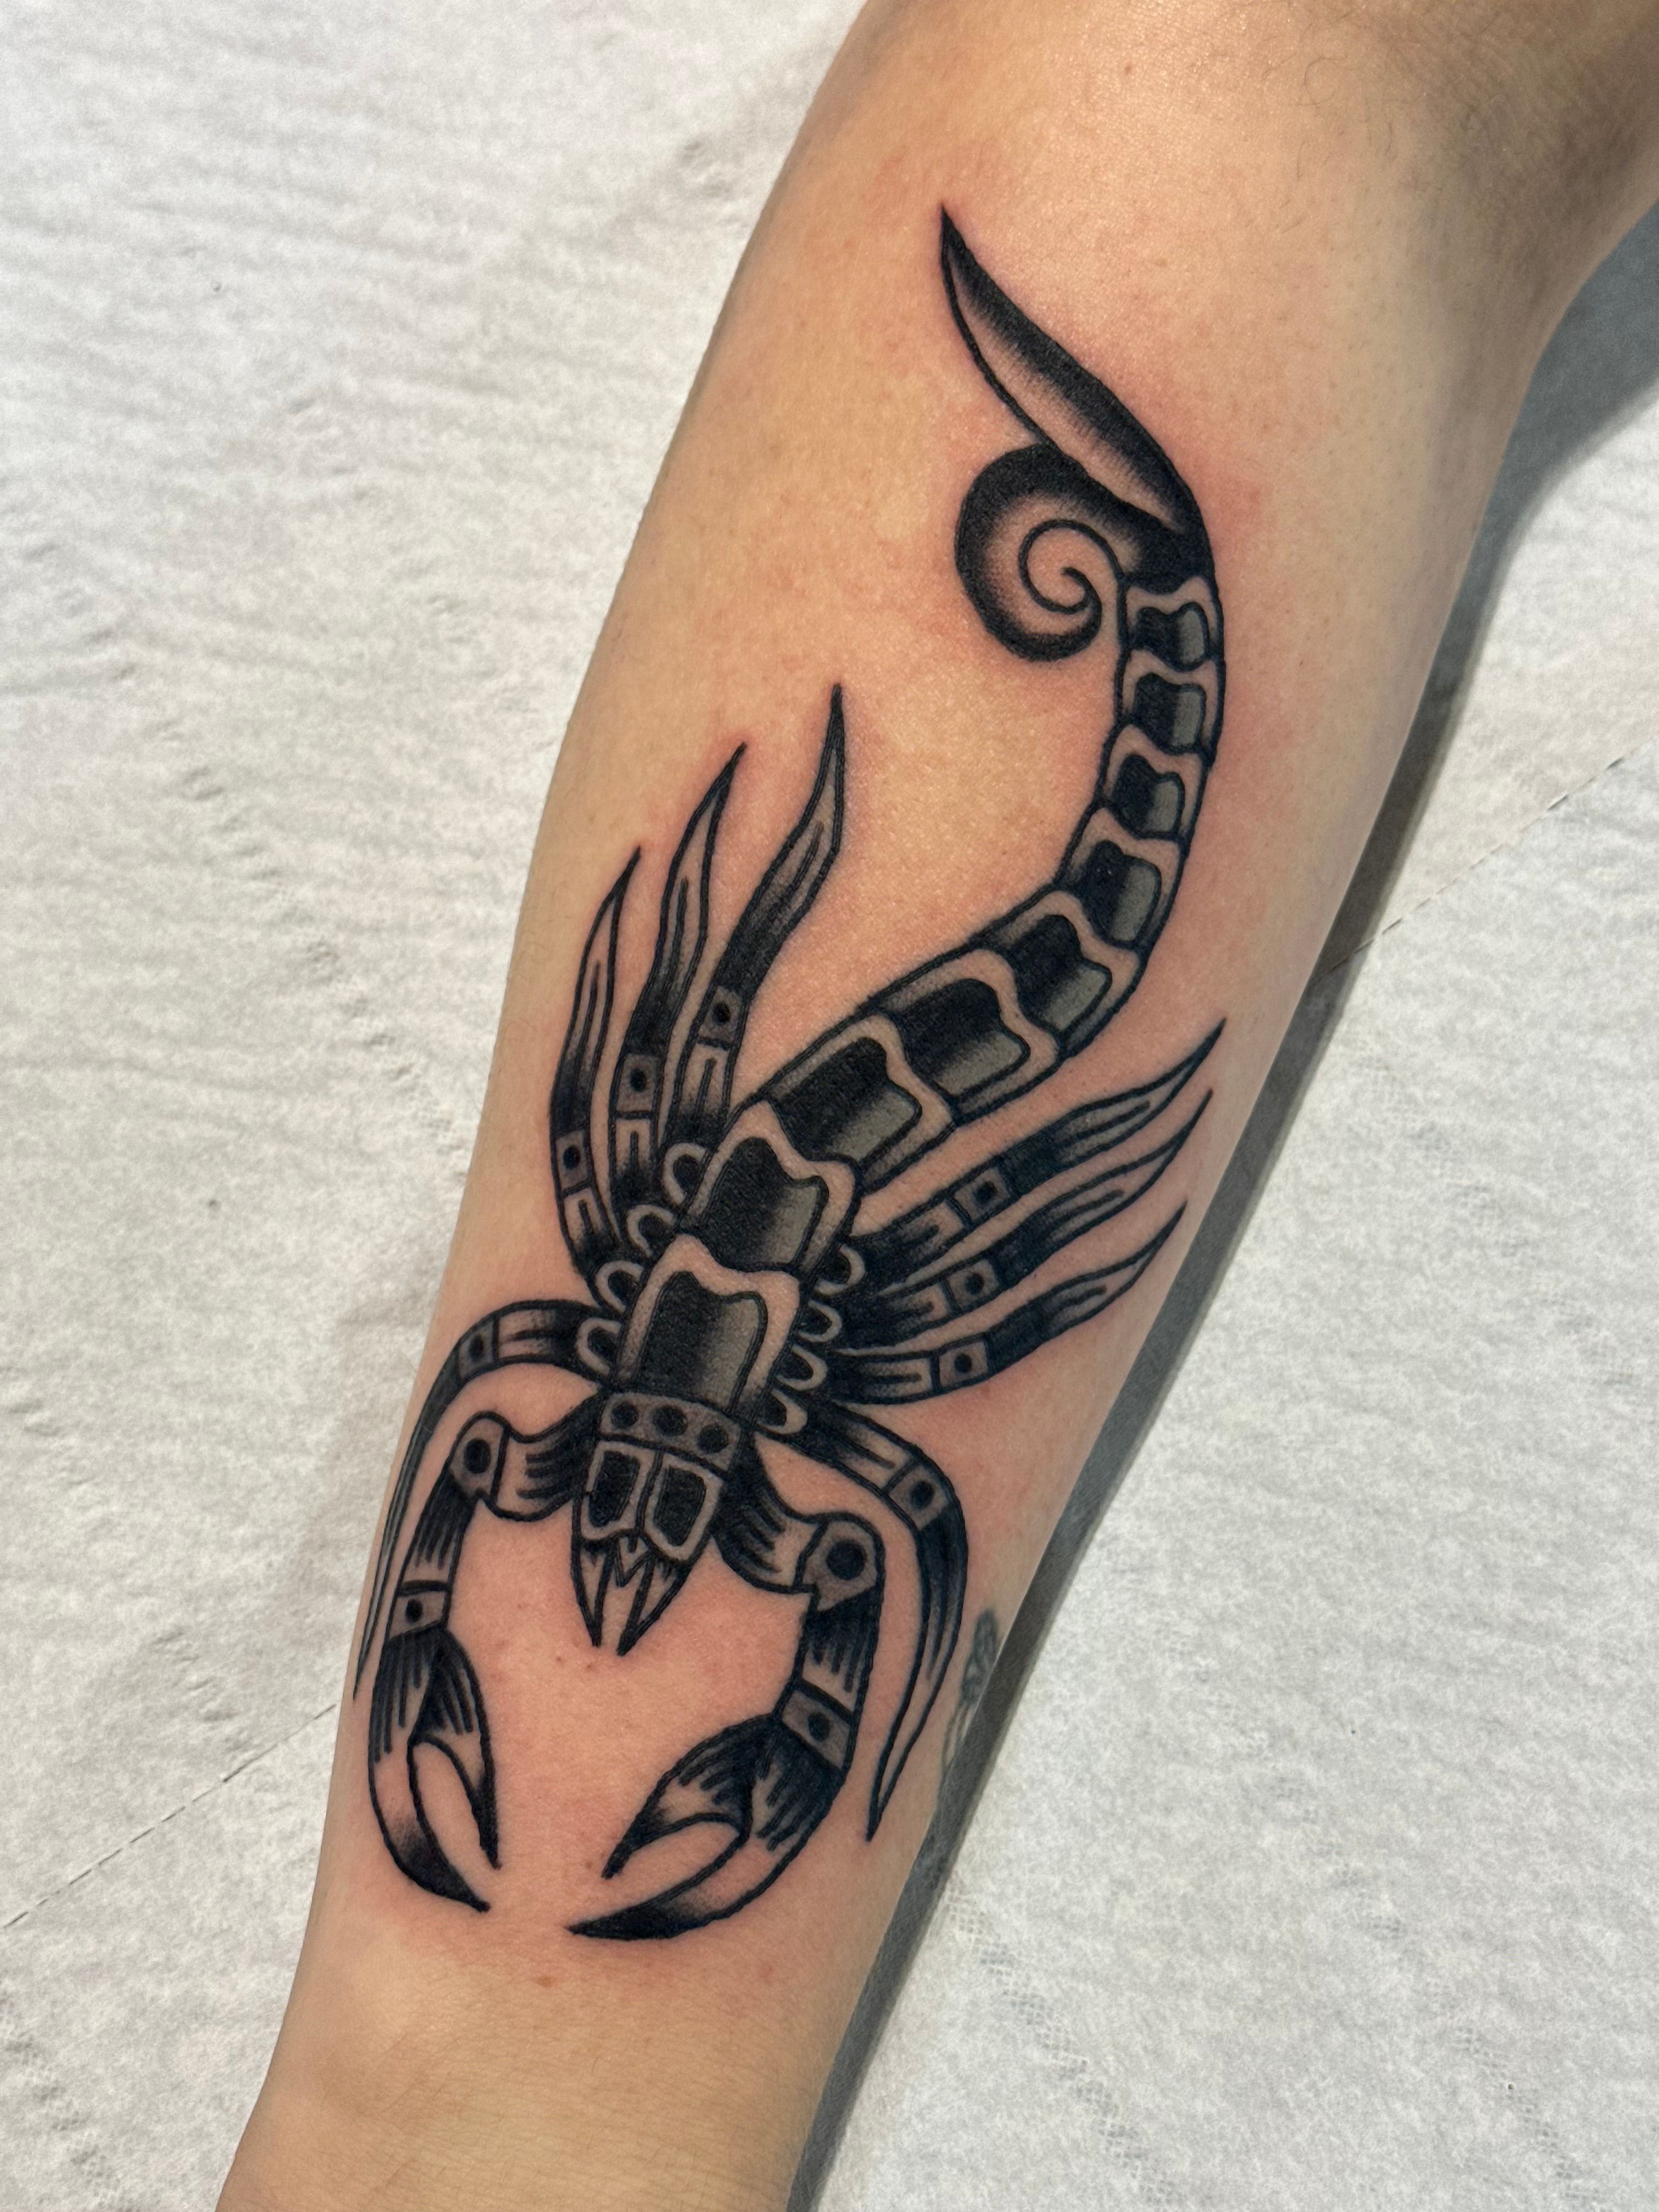 Scorpion Tattoo Gallery: Discover Unique Designs (60 Ideas) | Inkbox™